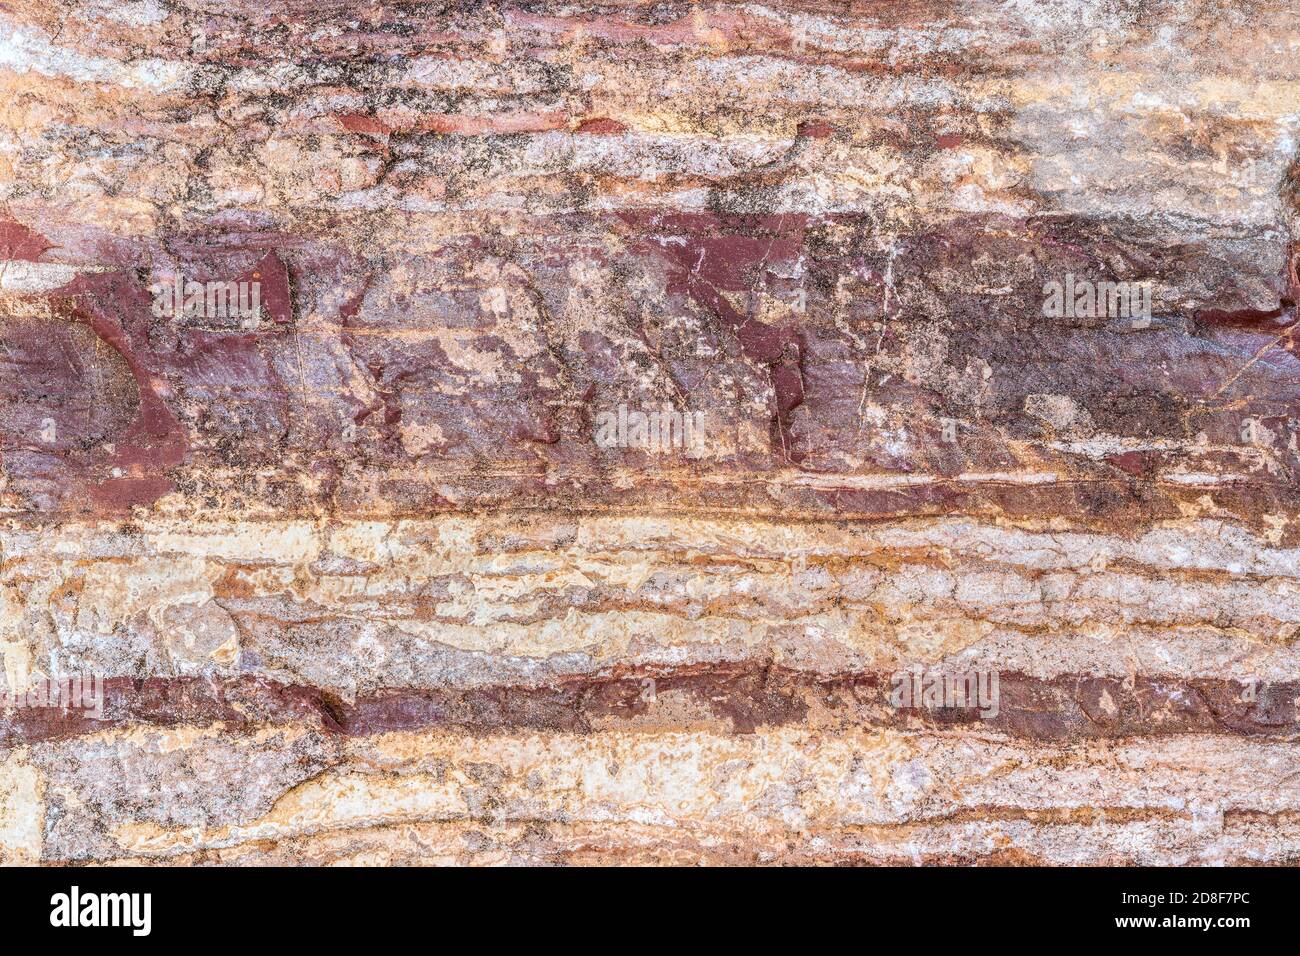 Precambrian metamorphic rock, Lake Superior region, W. Upper peninsula Michigan, USA, 4.5 to 5 billion years old, by Dominique Braud/Dembinsky Photo A Stock Photo